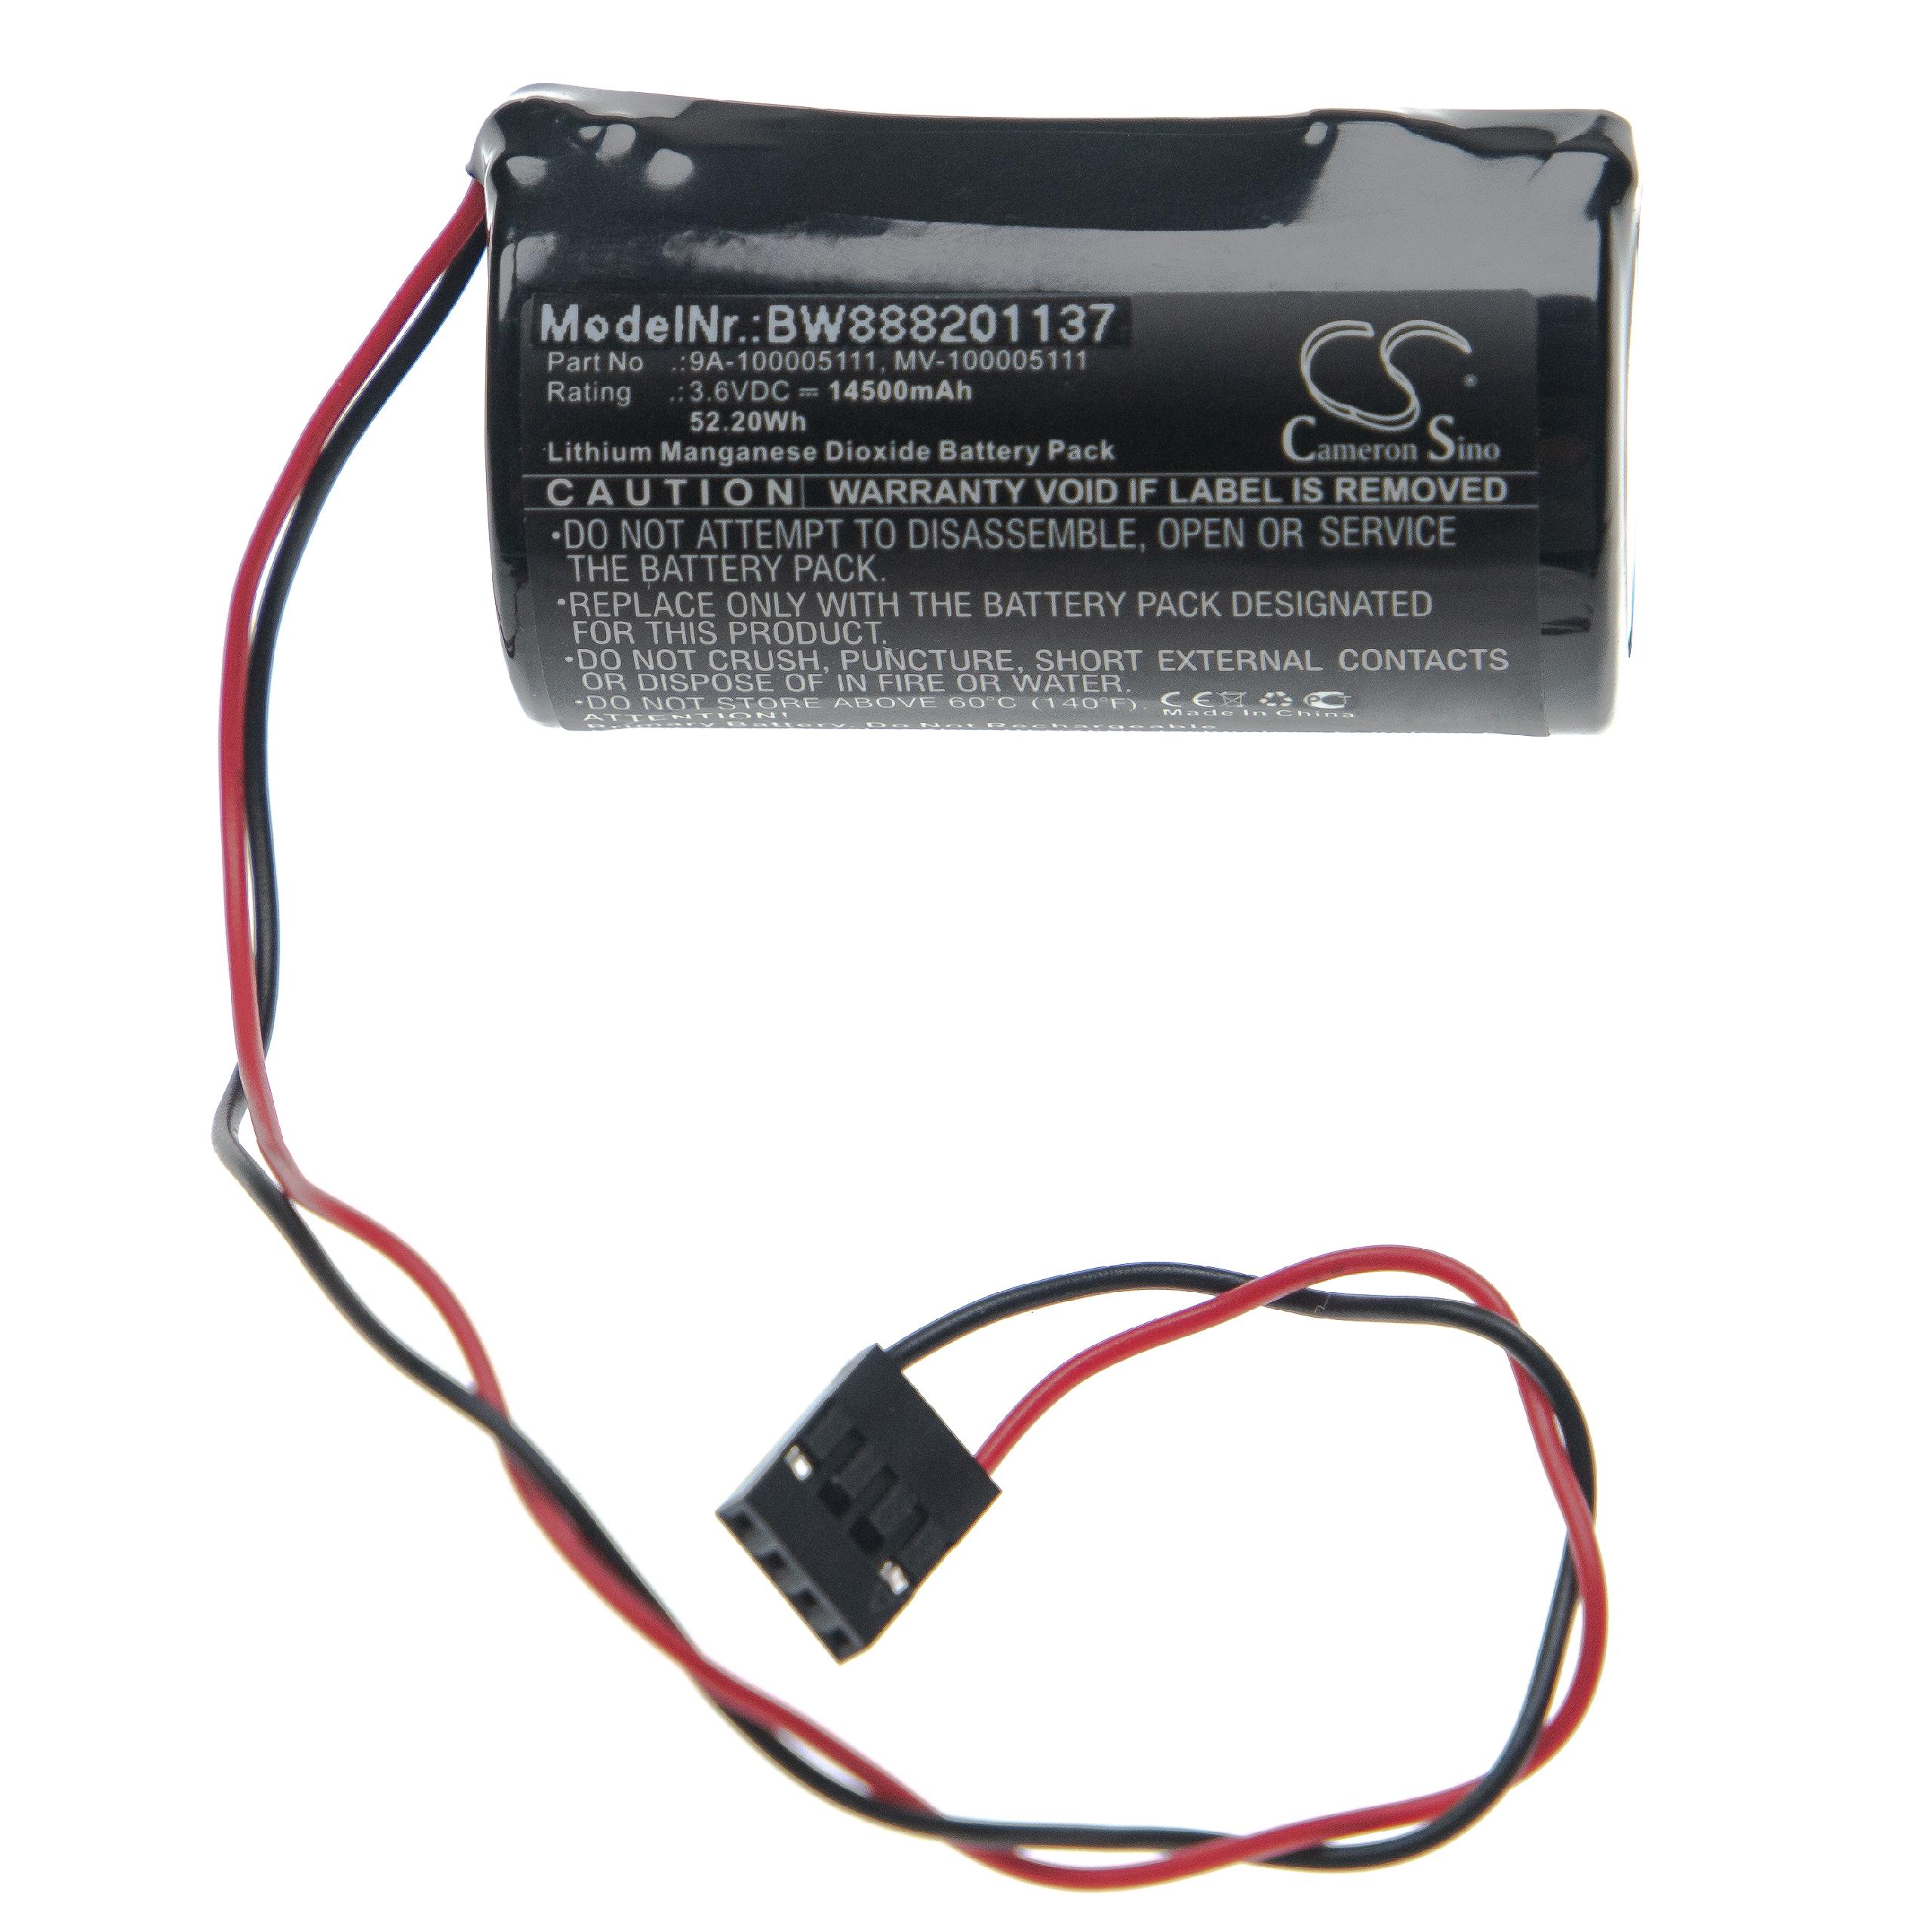 Messtechnik-Batterie als Ersatz für Cameron Nuflo 9A-100005111, LS33600-CN1 - 14500mAh 3,6V Li-MnO2